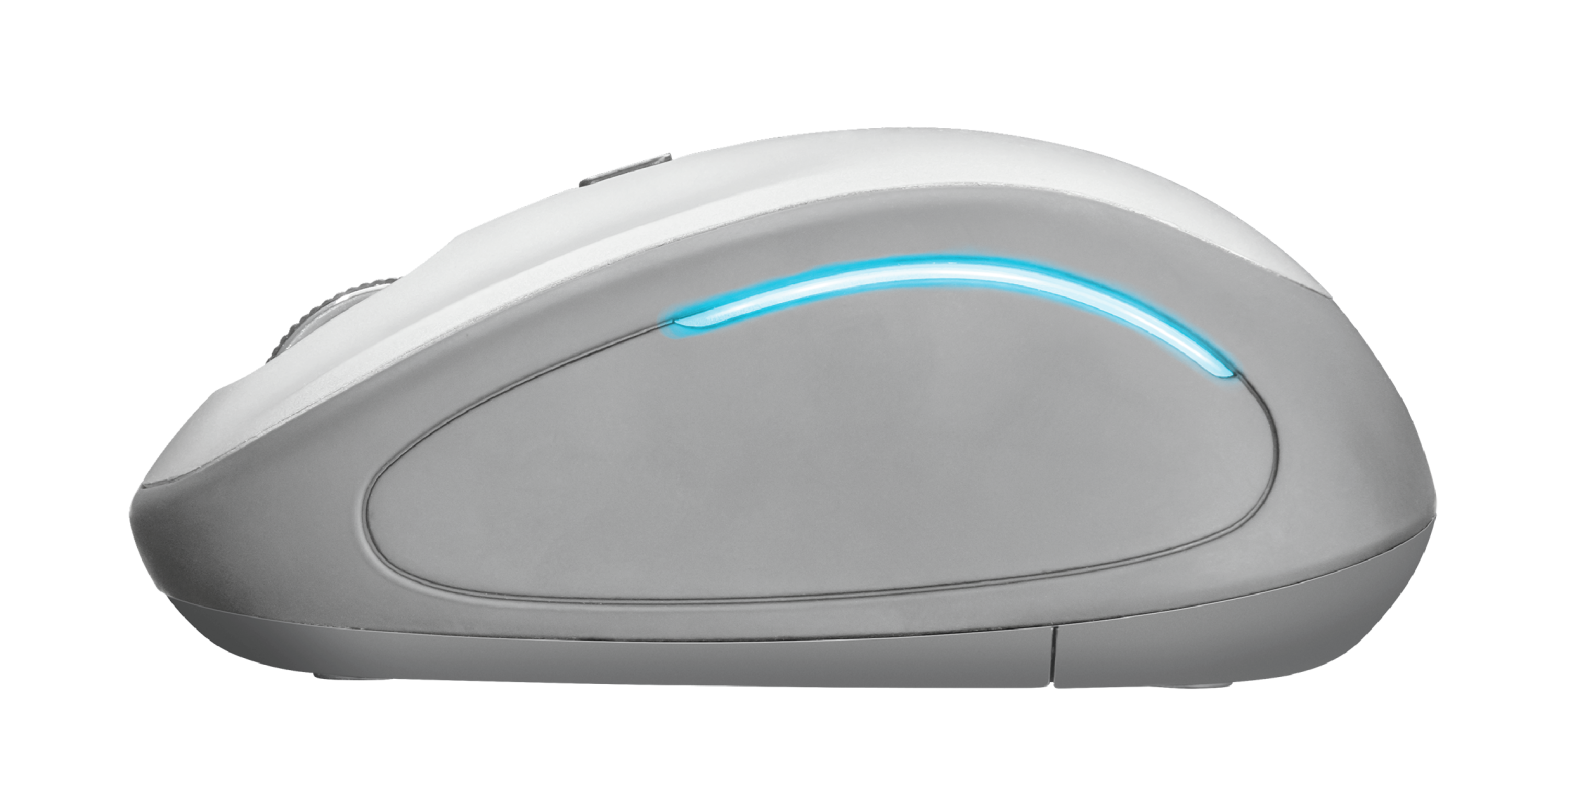 Yvi FX Wireless Mouse - white-Side